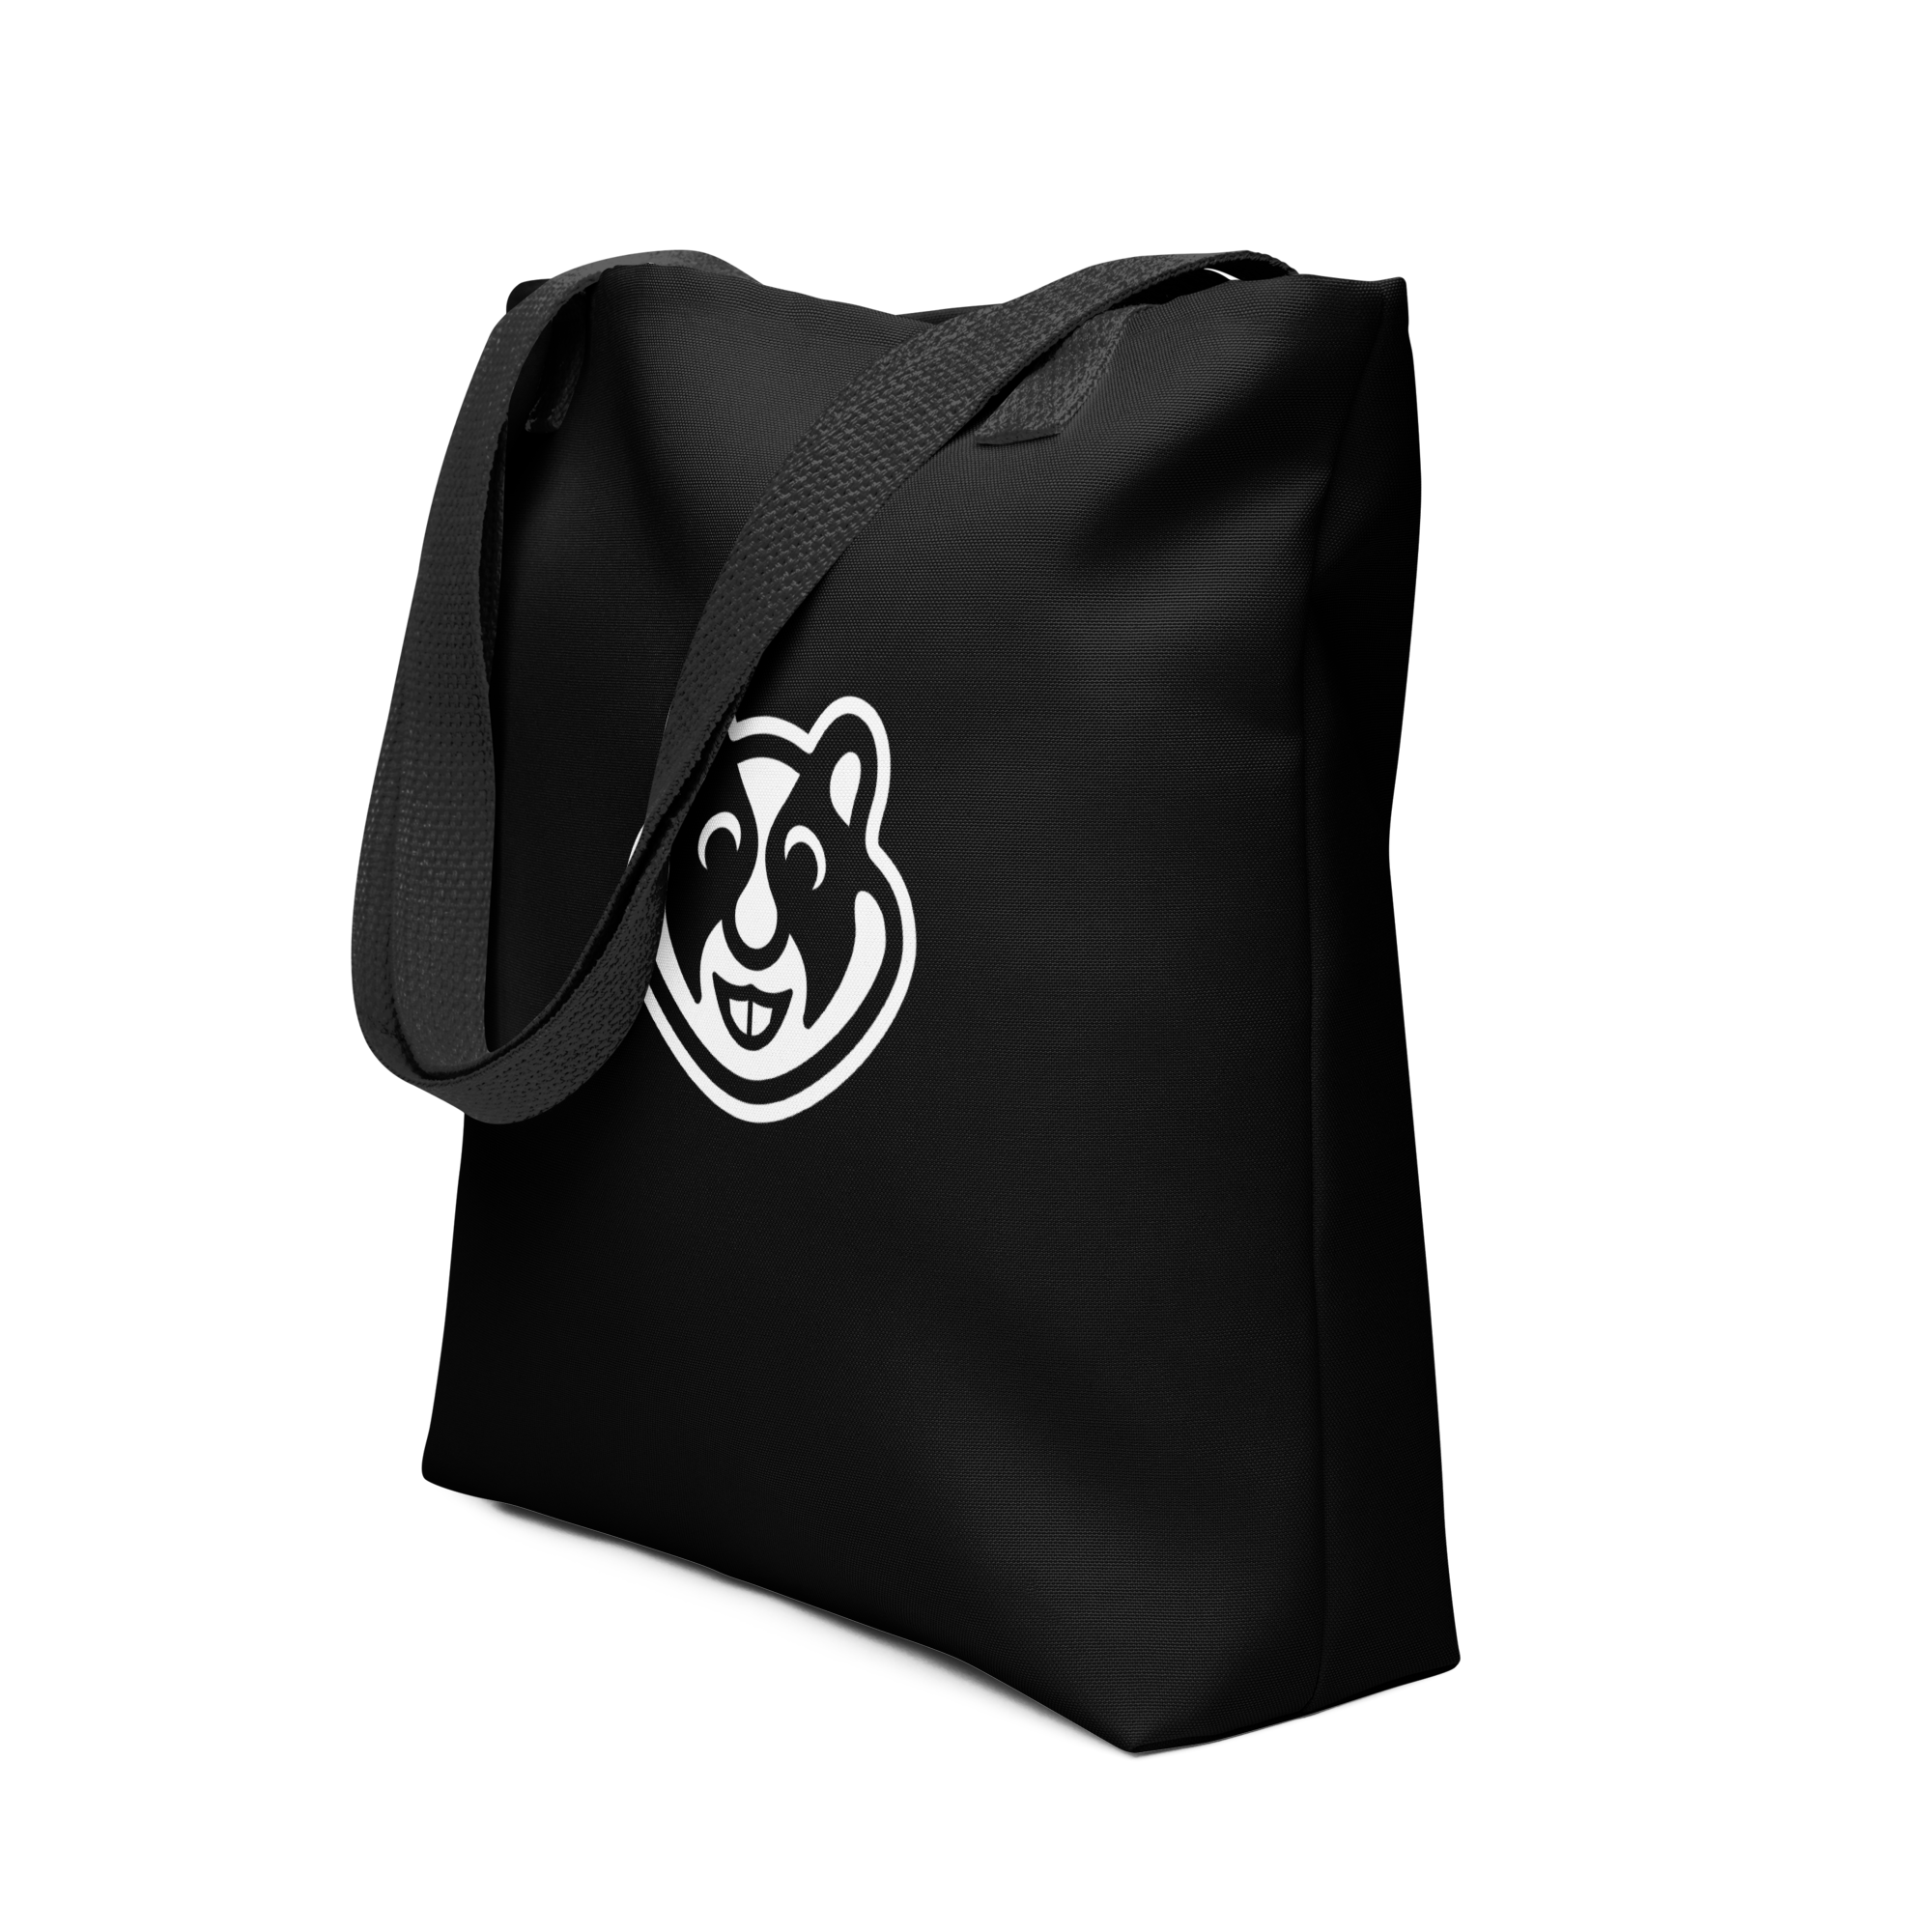 xHamster Tote Bag Black (Mascot)